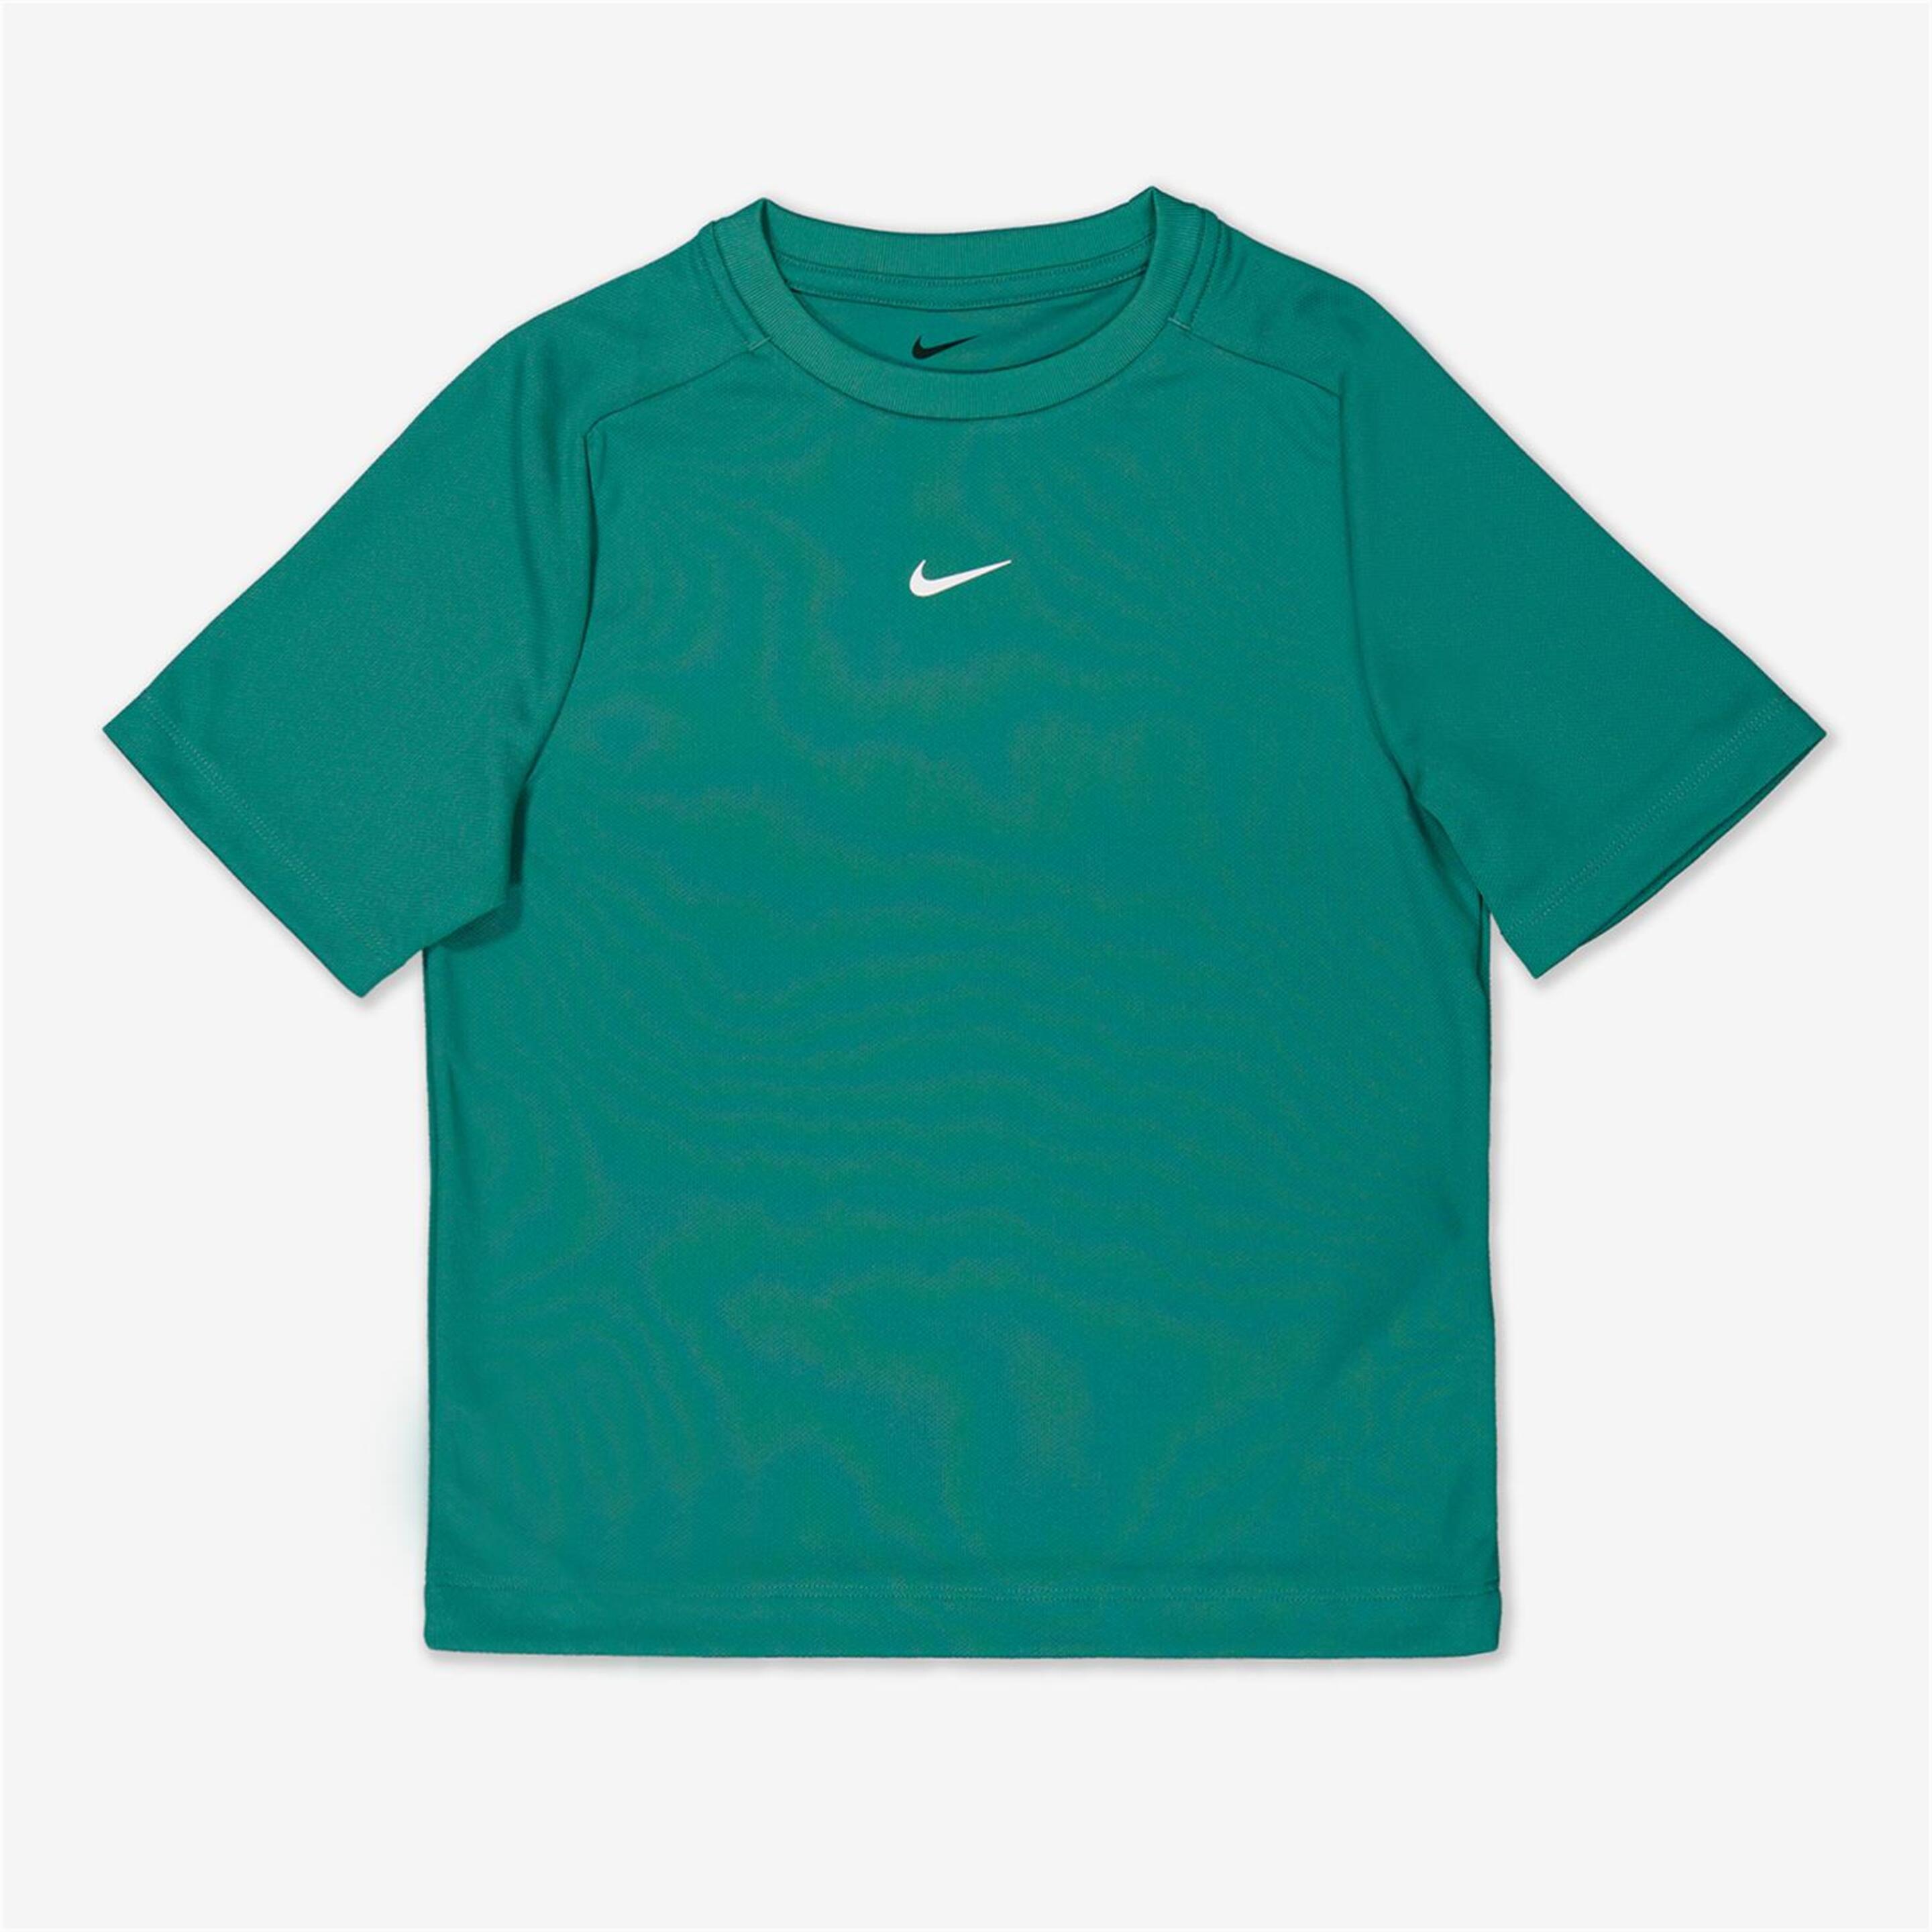 Camiseta Nike - Kaki - Camiseta Running Hombre